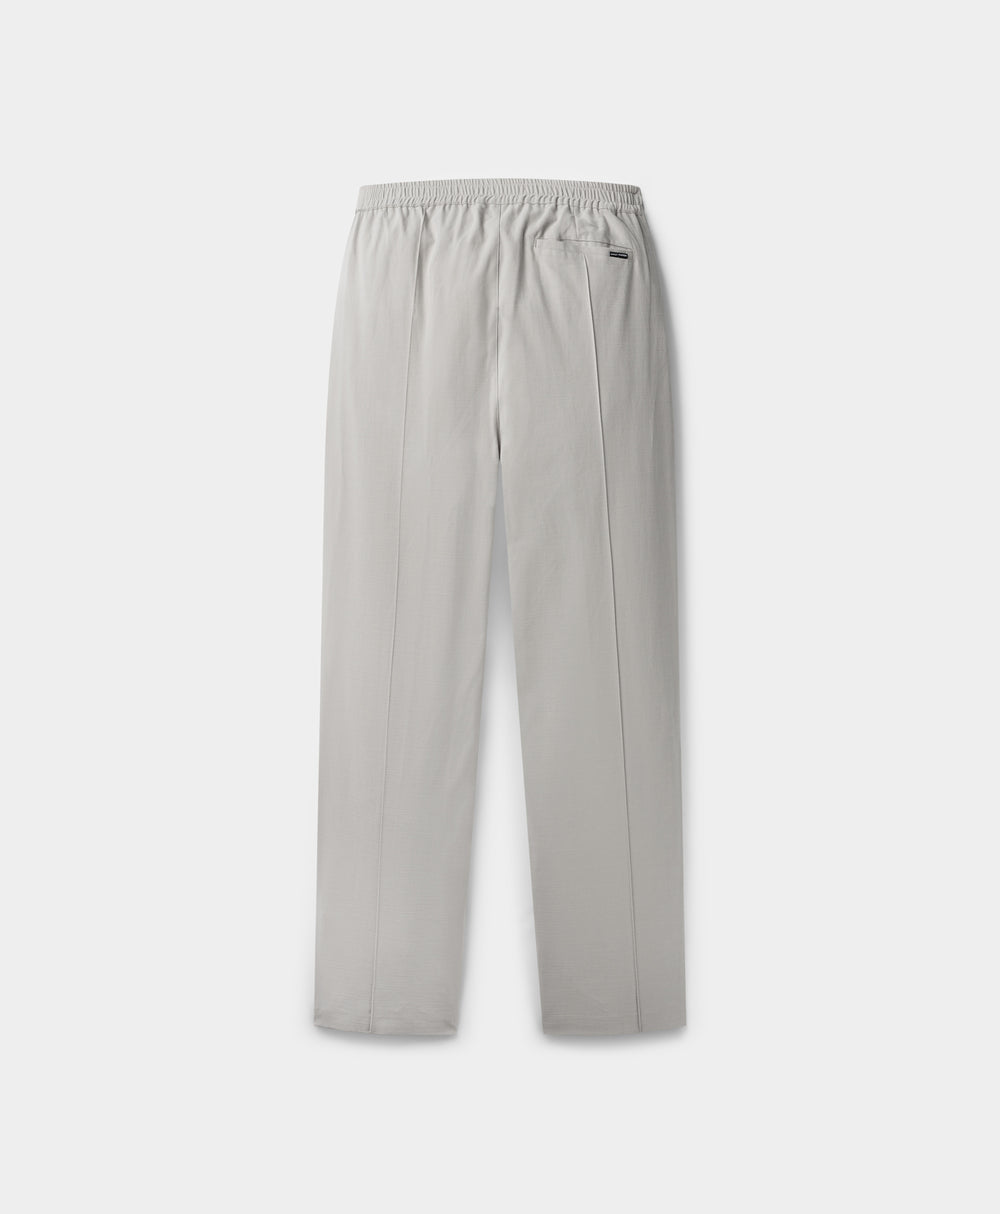 DP - Sleet Grey Dembe Pants - Packshot - Rear